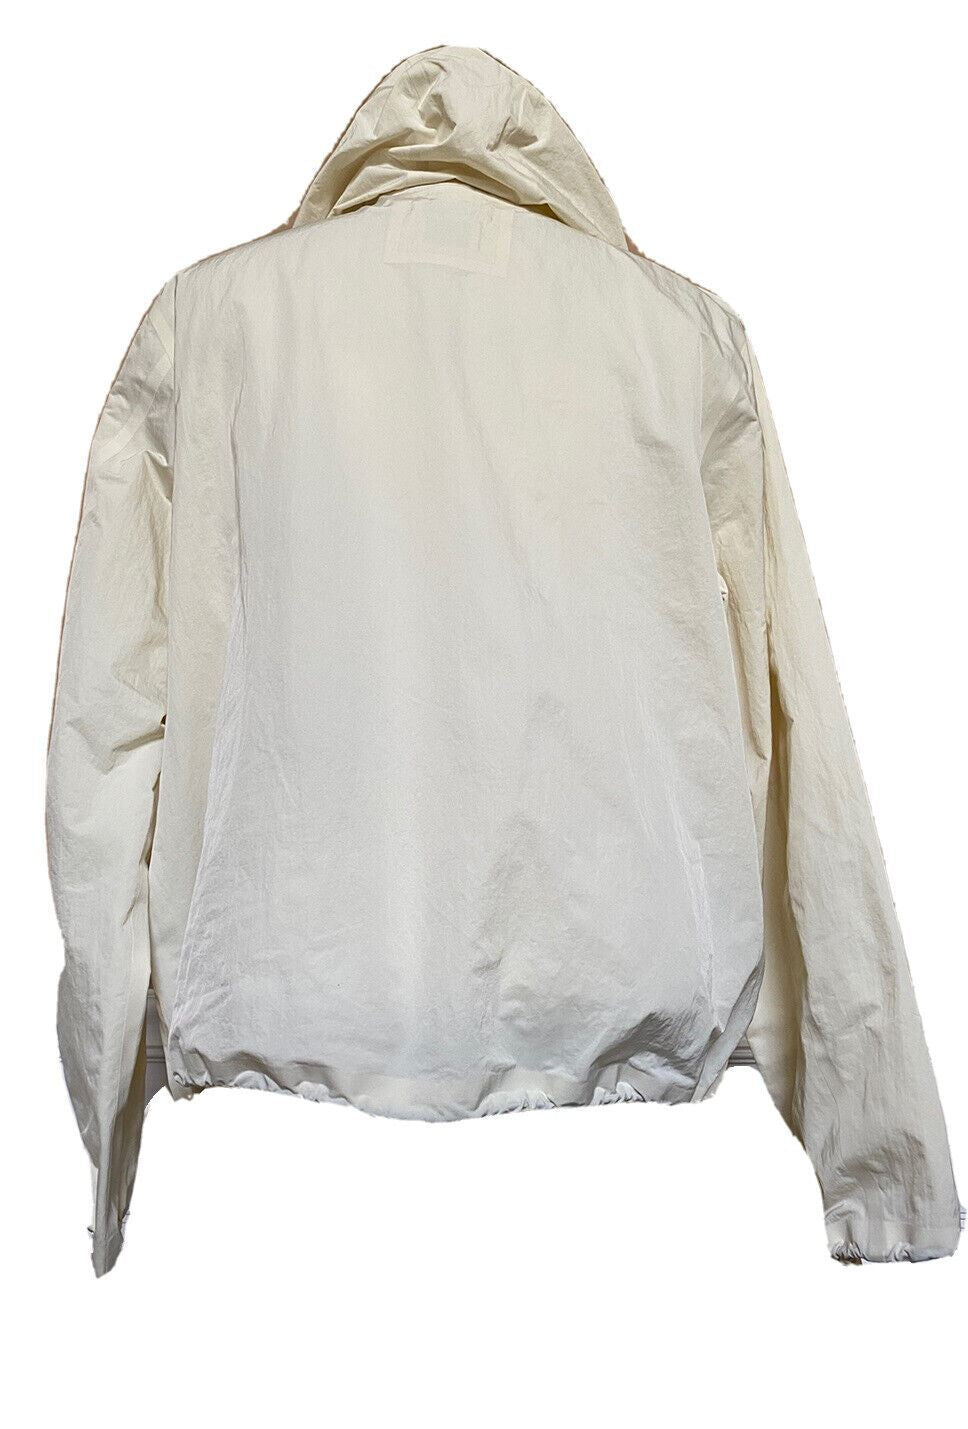 NWT $1850 Bottega Veneta Men's Blouson Tech Nylon Chalk Jacket with Hoodie 40 US